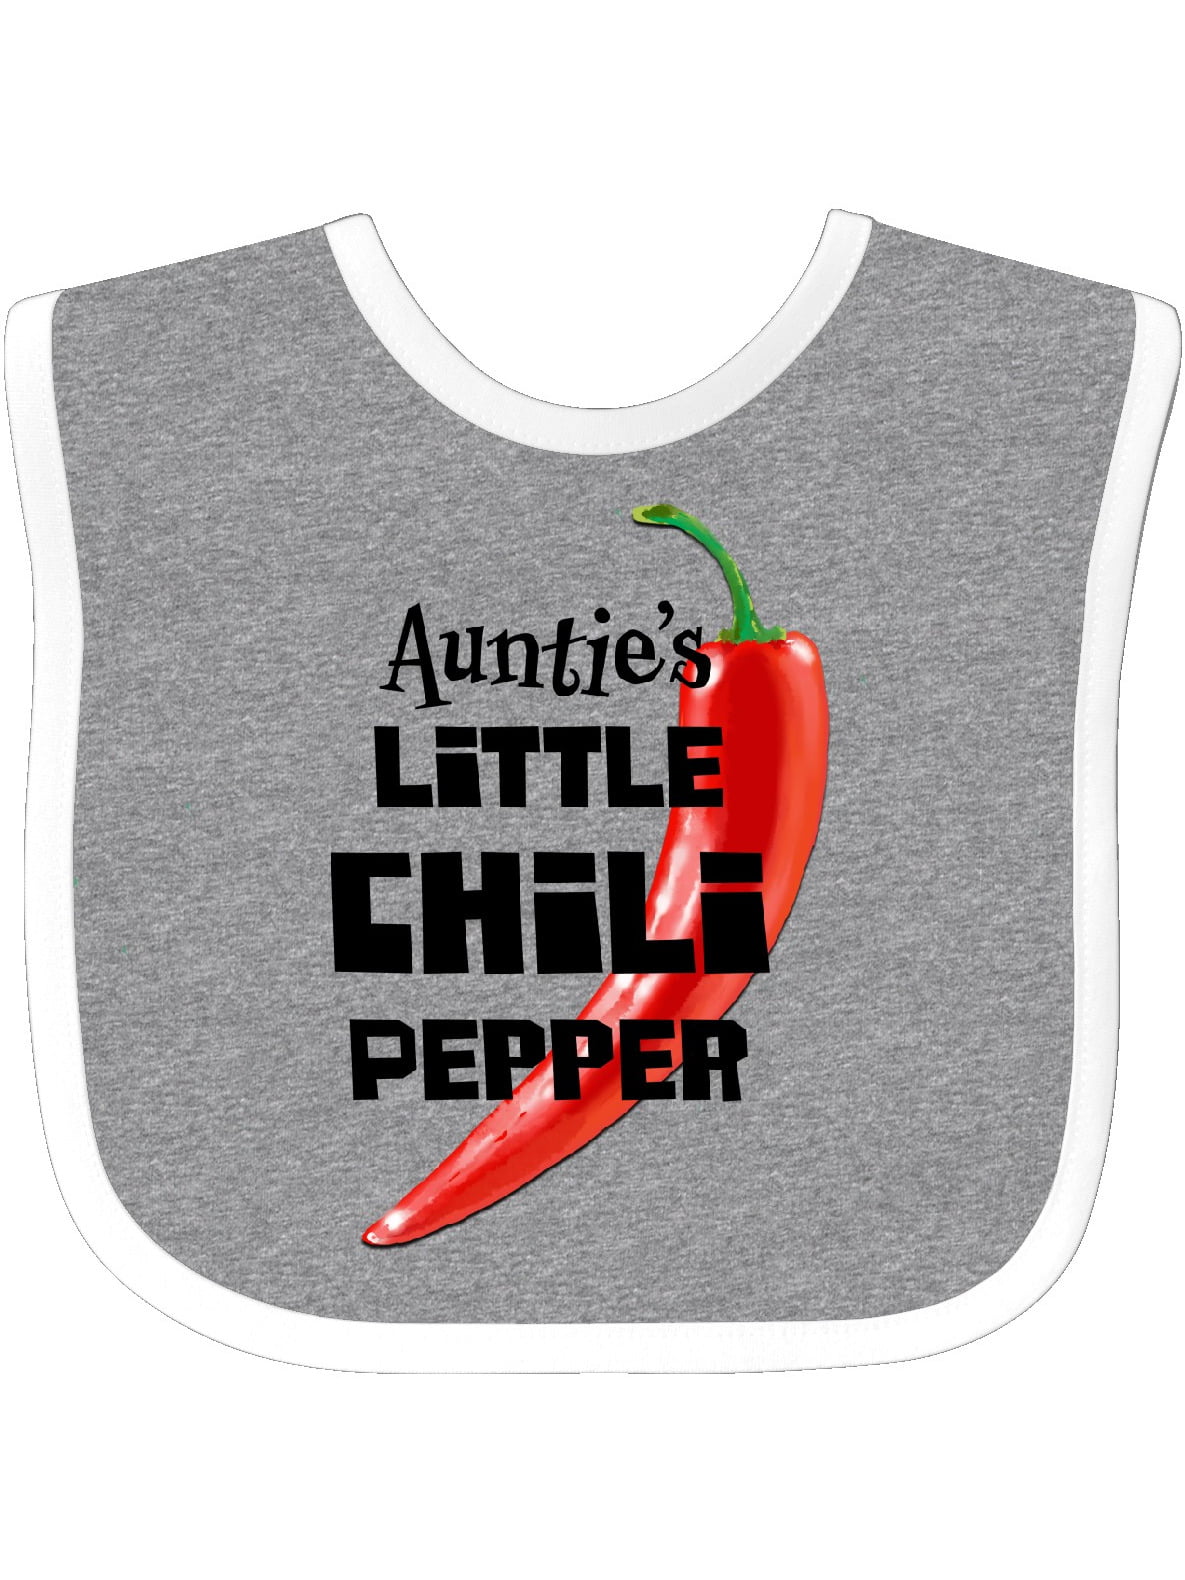 Auntie's Little Chili Pepper Baby Bib - Walmart.com ...